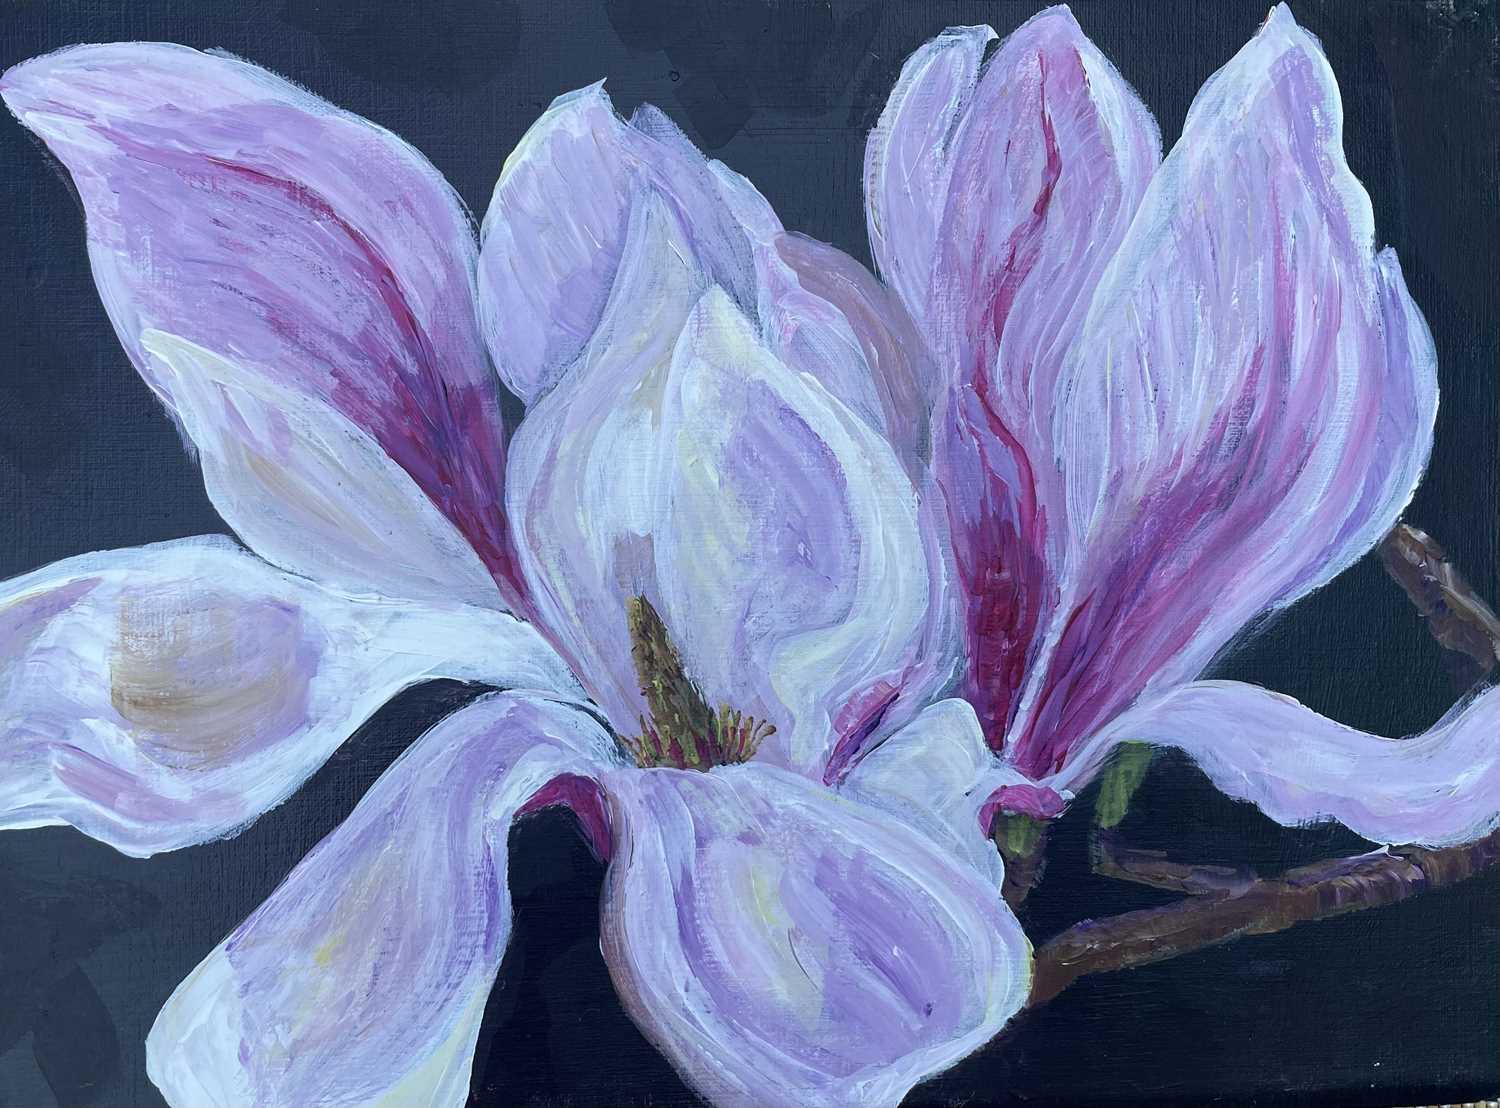 Morwenna Jones. “Magnolia”.  Acrylic on canvas. 32 x 24cms.